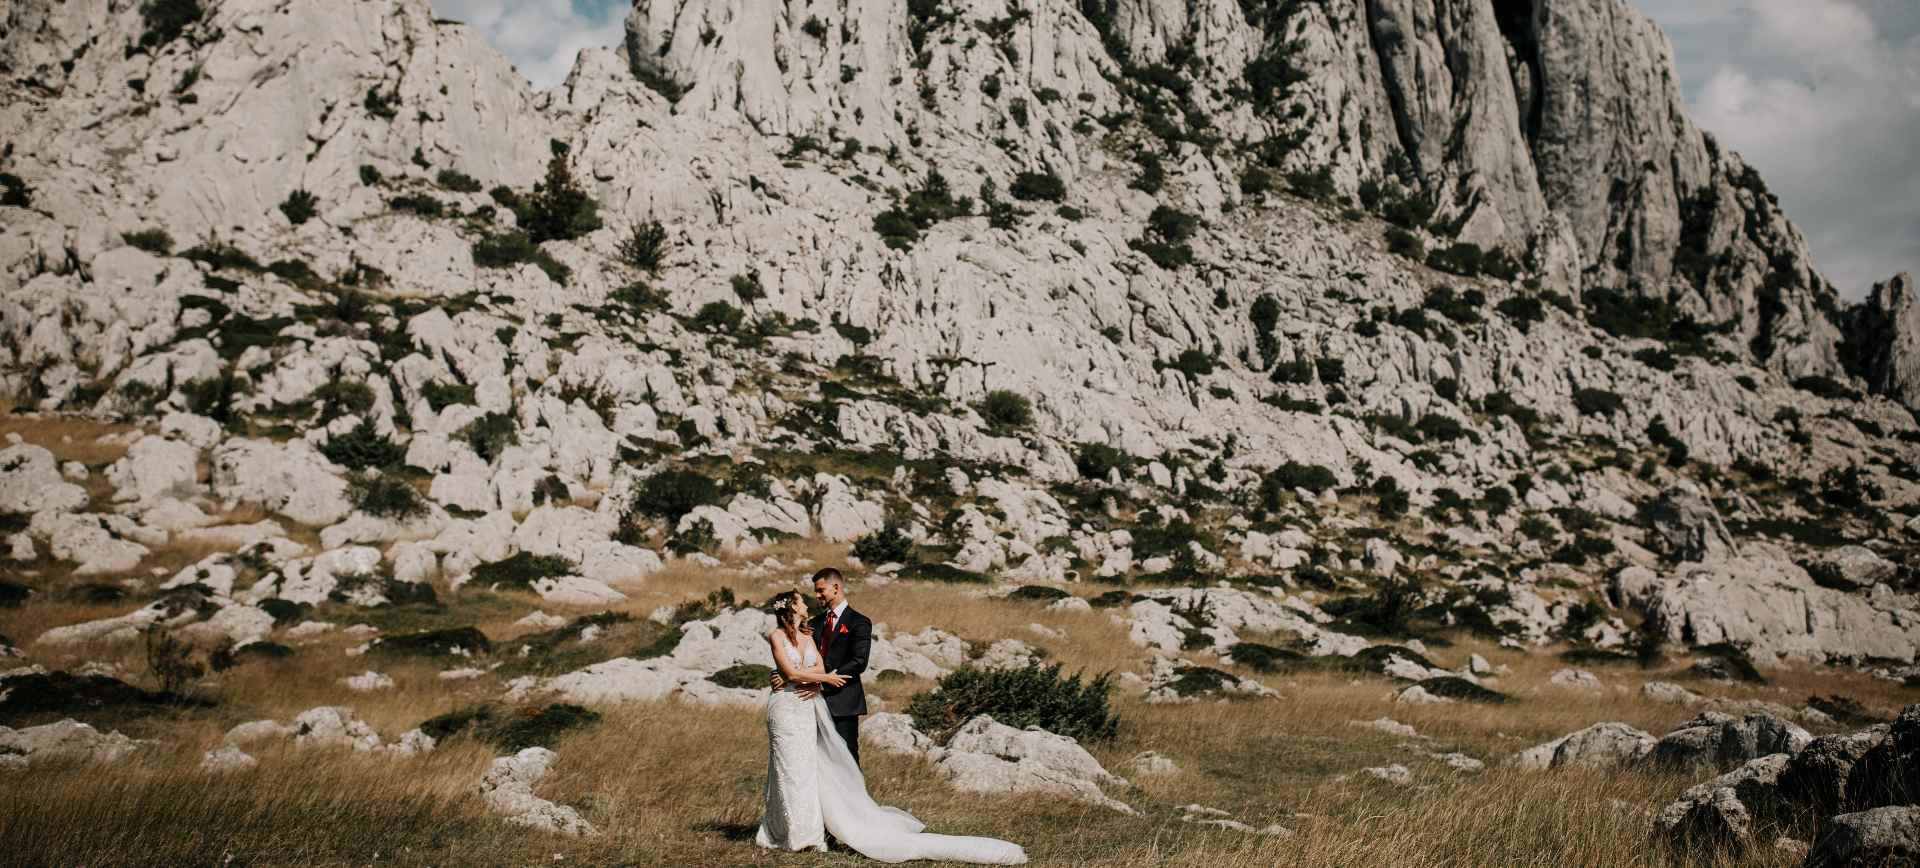 hiking adventure wedding mediterranean elope to croatia